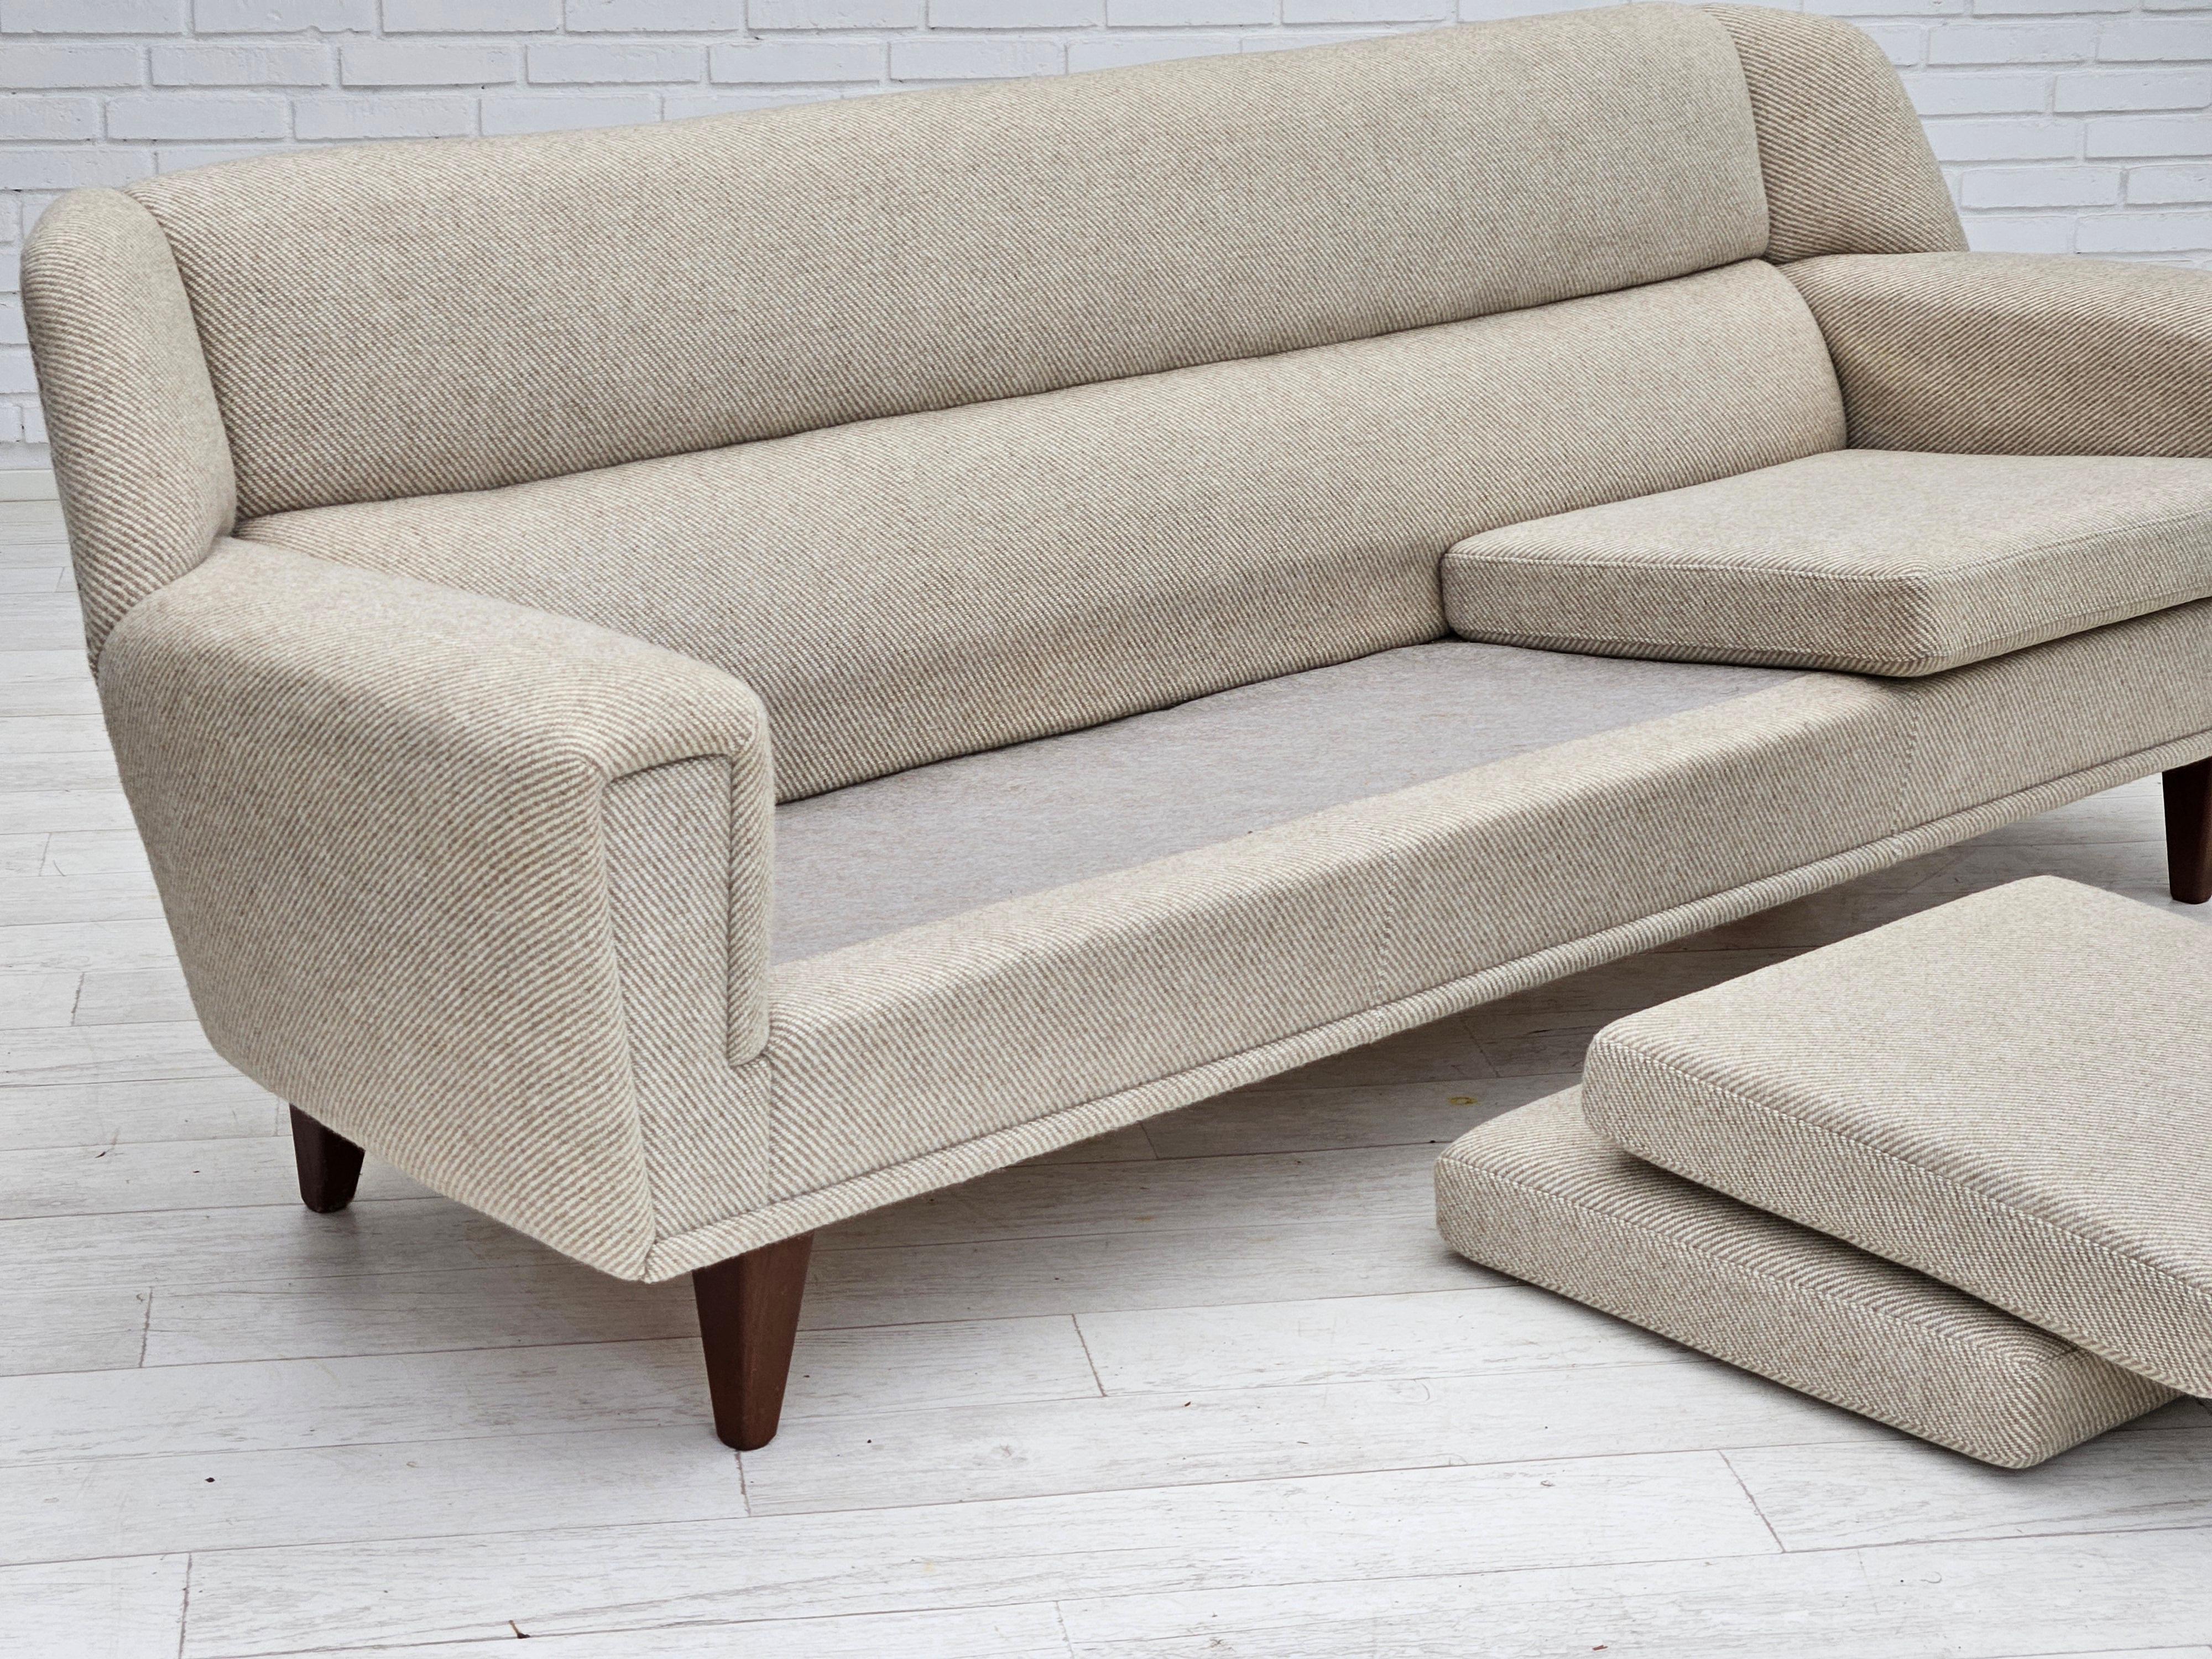 1960s, Danish design sofa by Kurt Østervig model 61, original good condition. 7